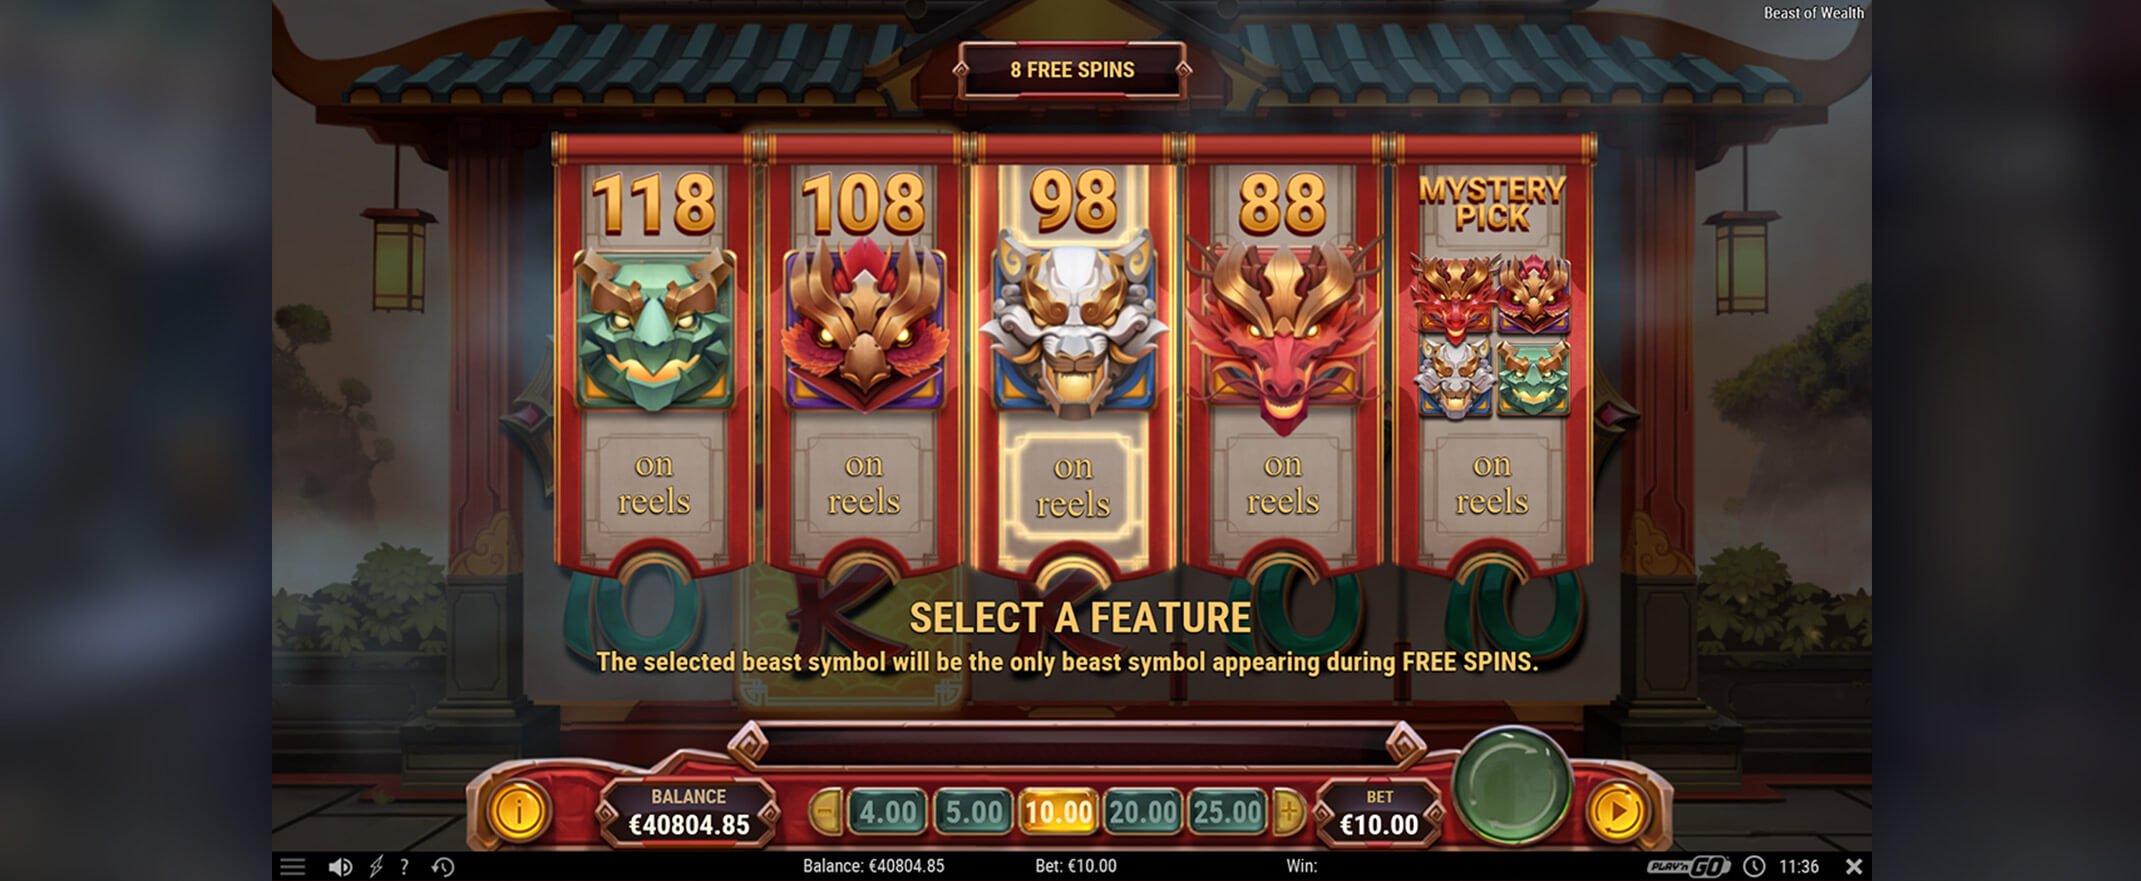 Beast of Wealth slot screenshot